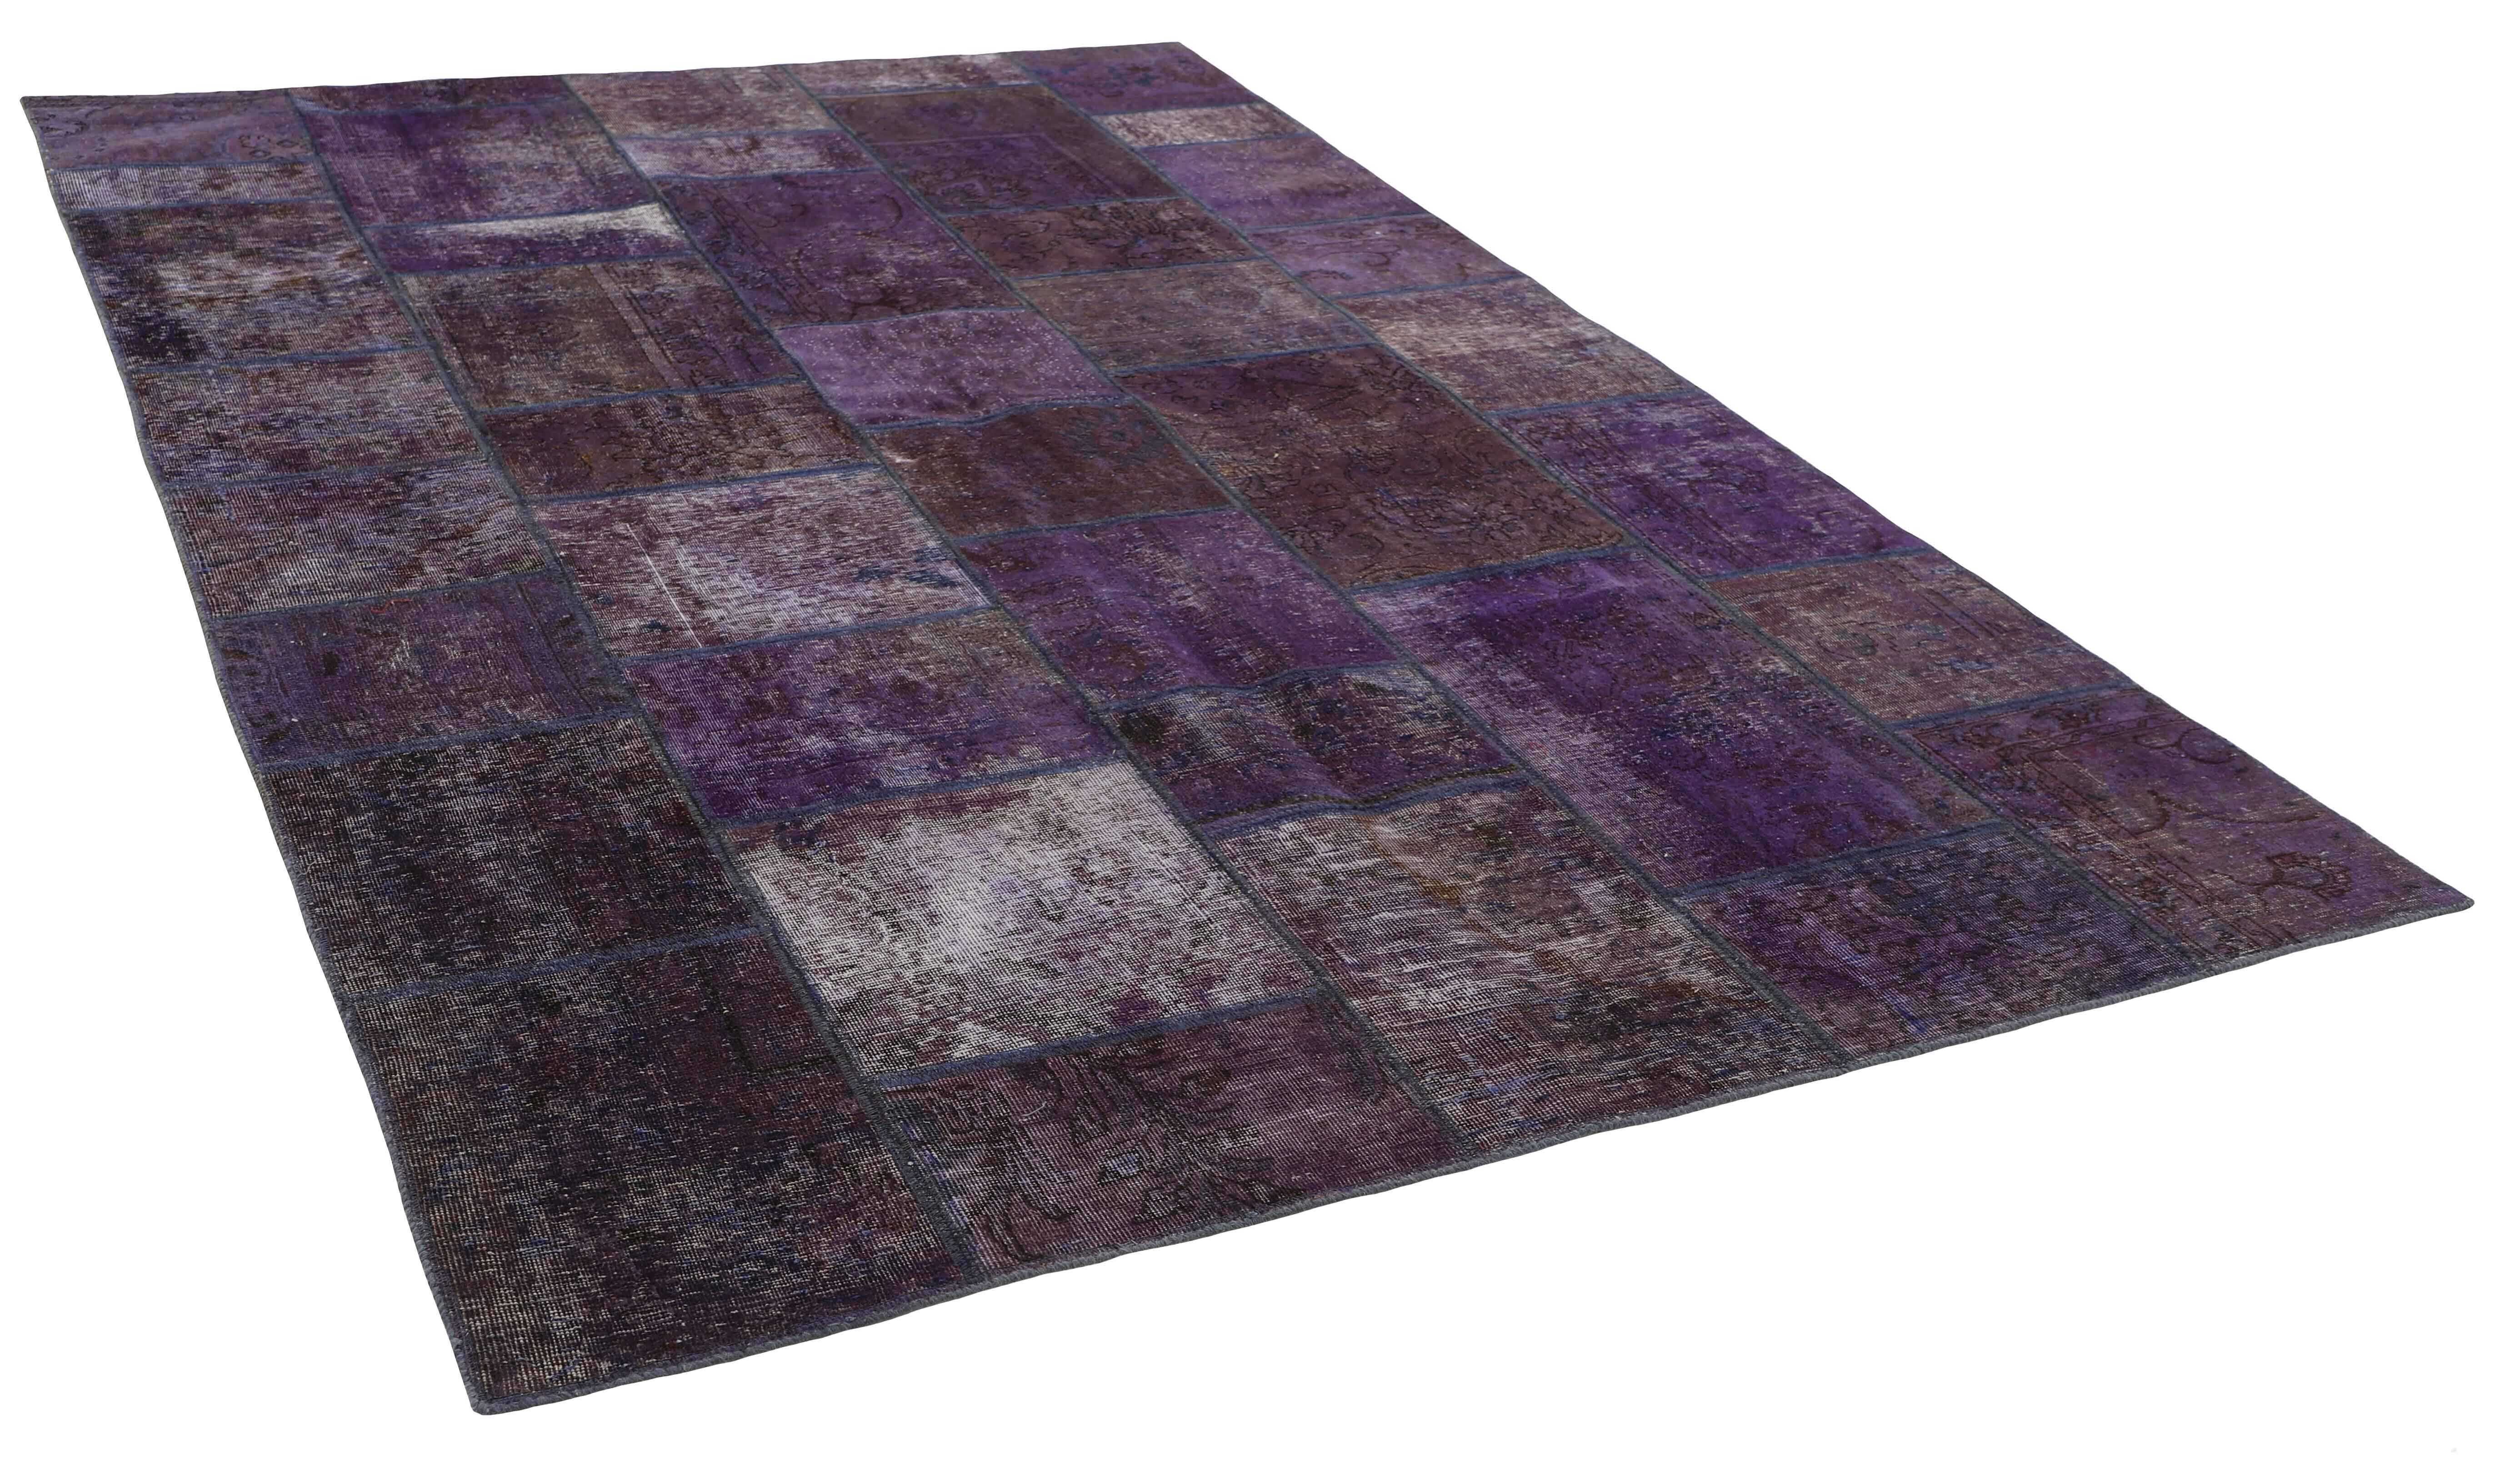 Authentic purple patchwork persian rug